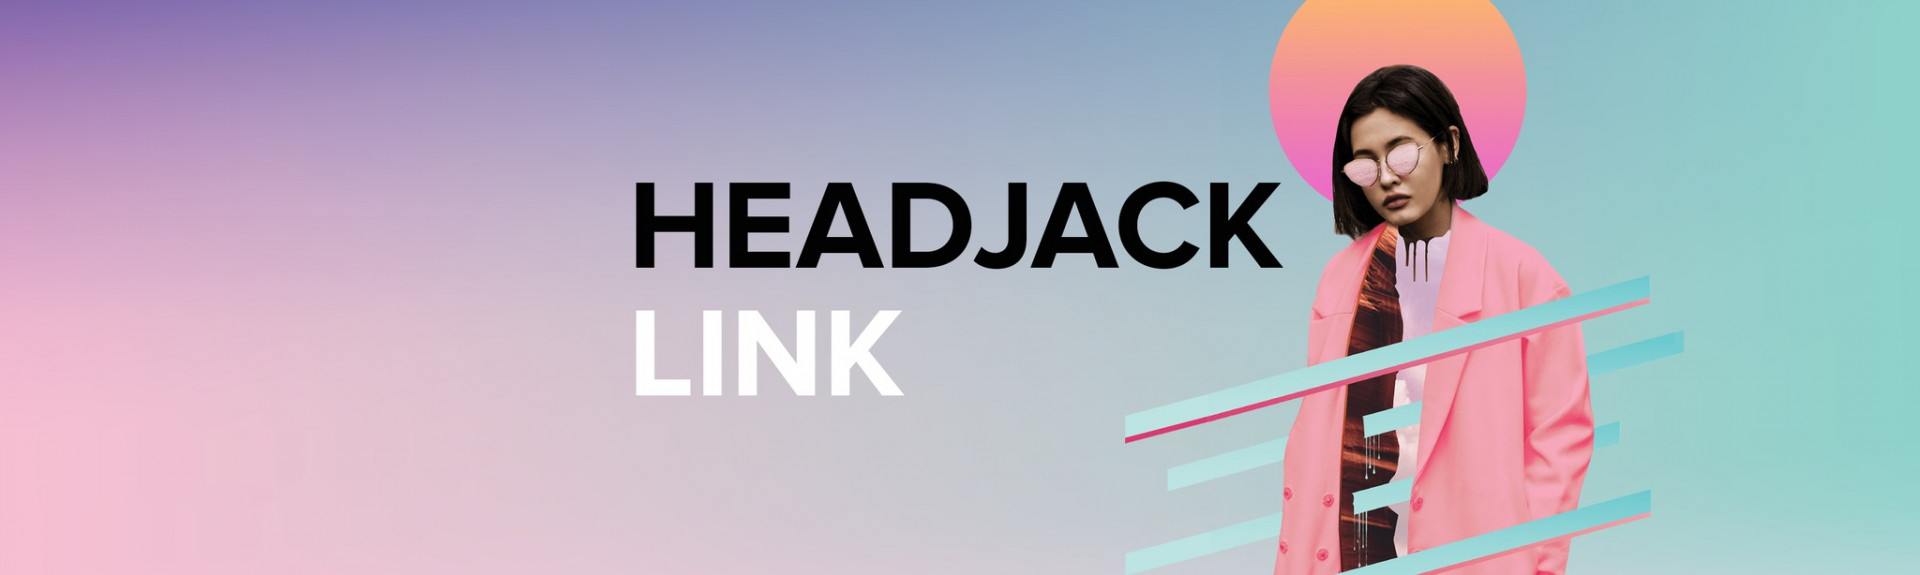 Headjack Link